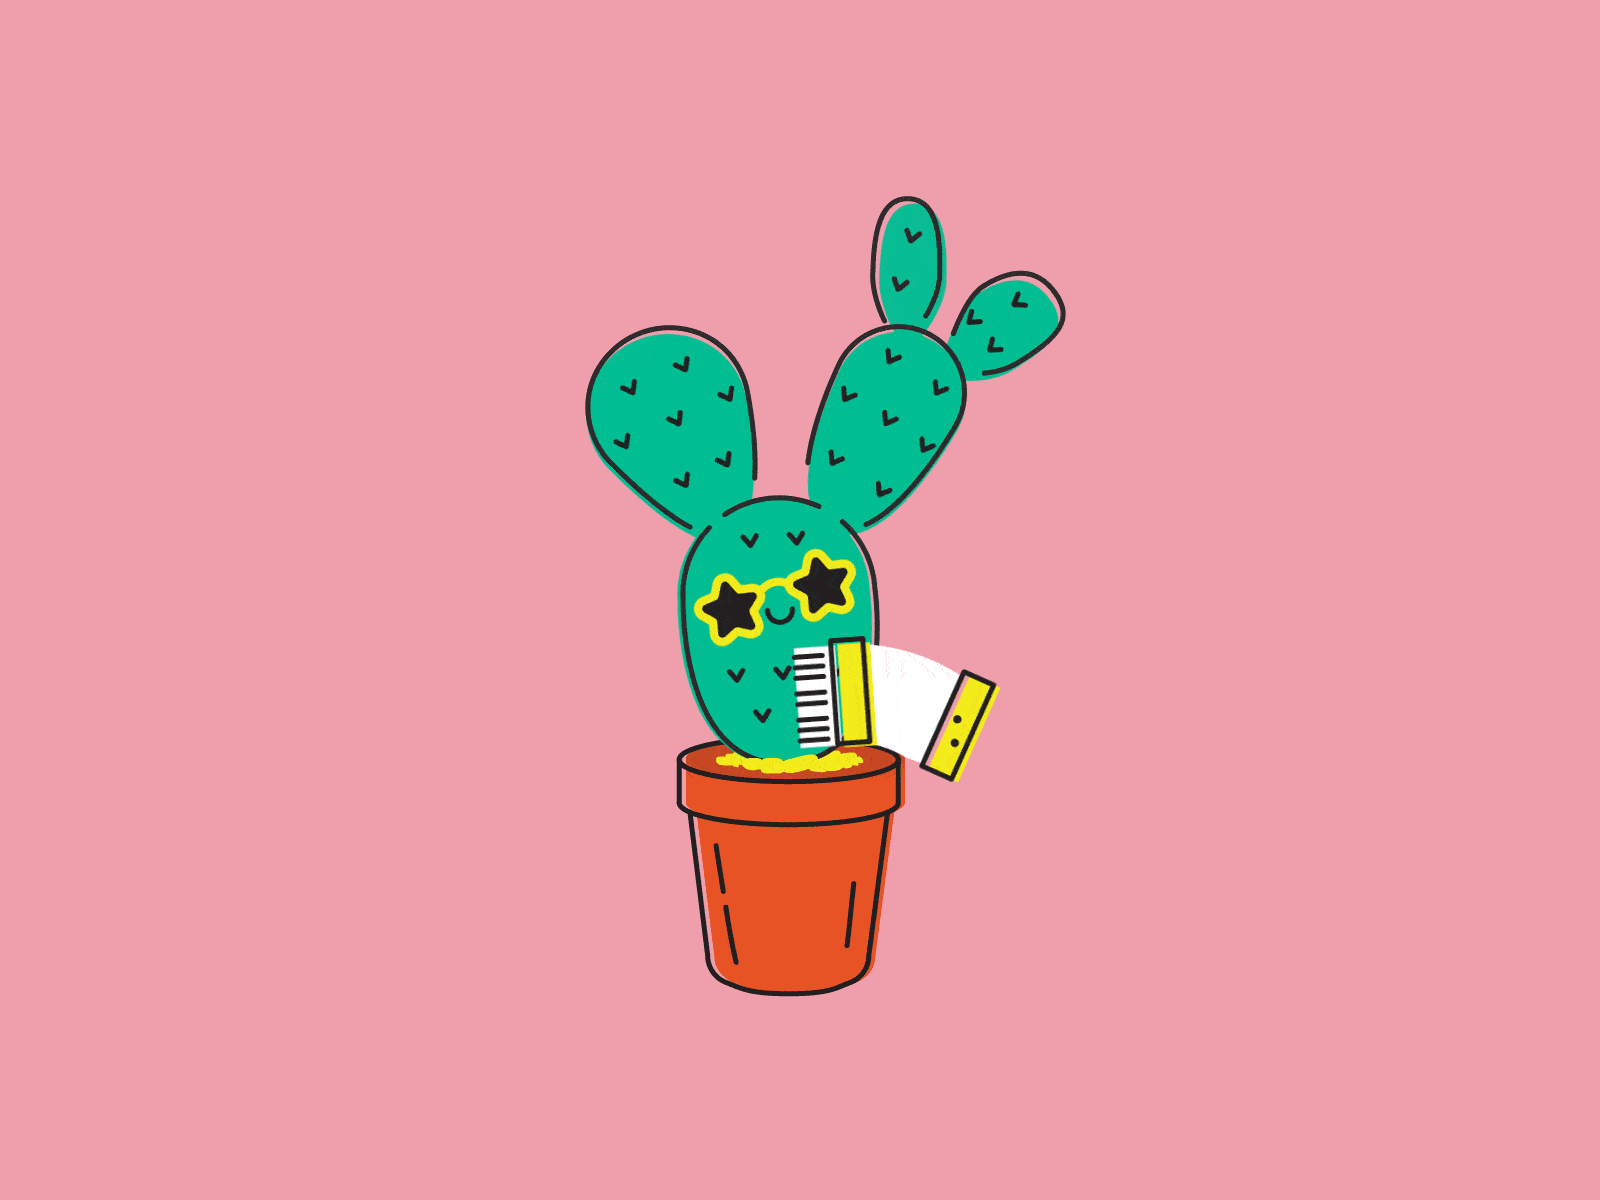 Dancing Cactus - Accordion